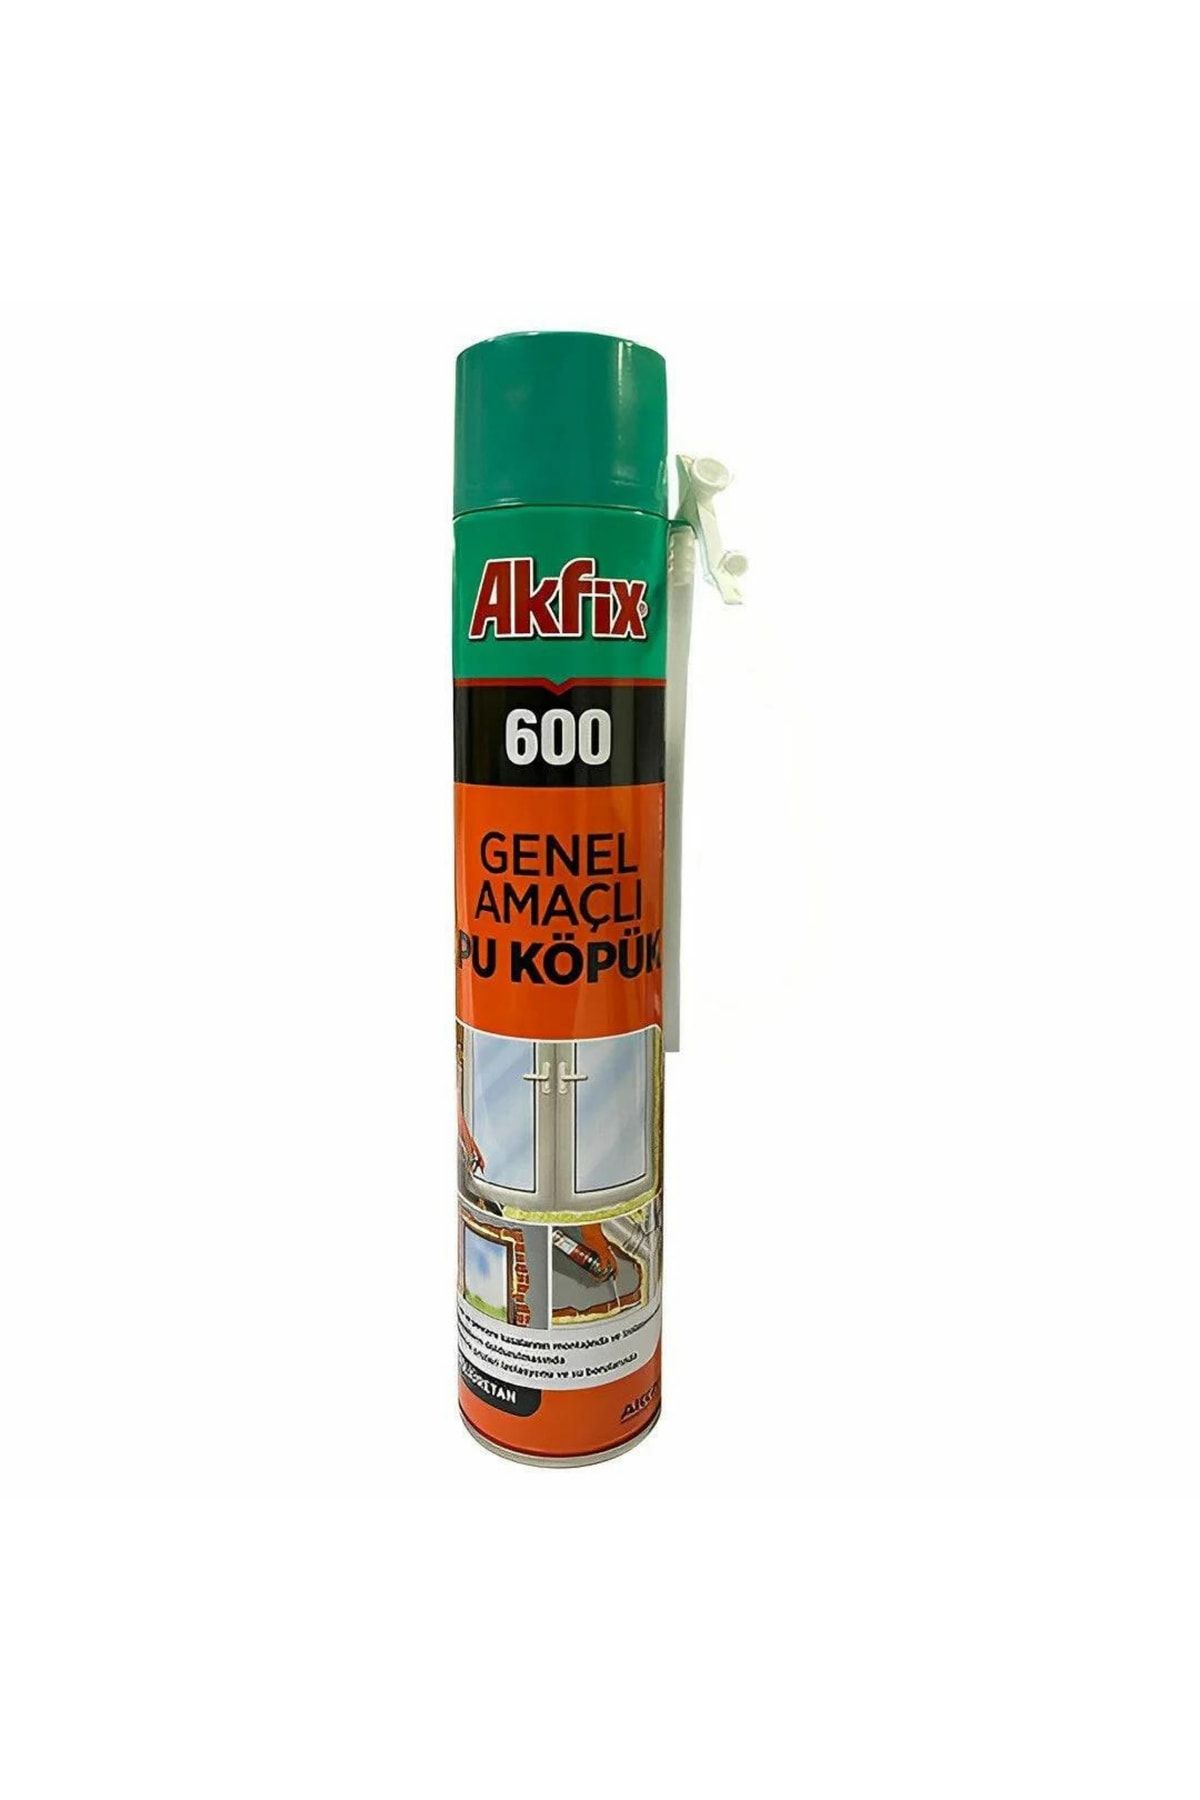 Akfix 600 Genel Amaçlı Pu Köpük 750 Ml / 600 Gr 2 Adet